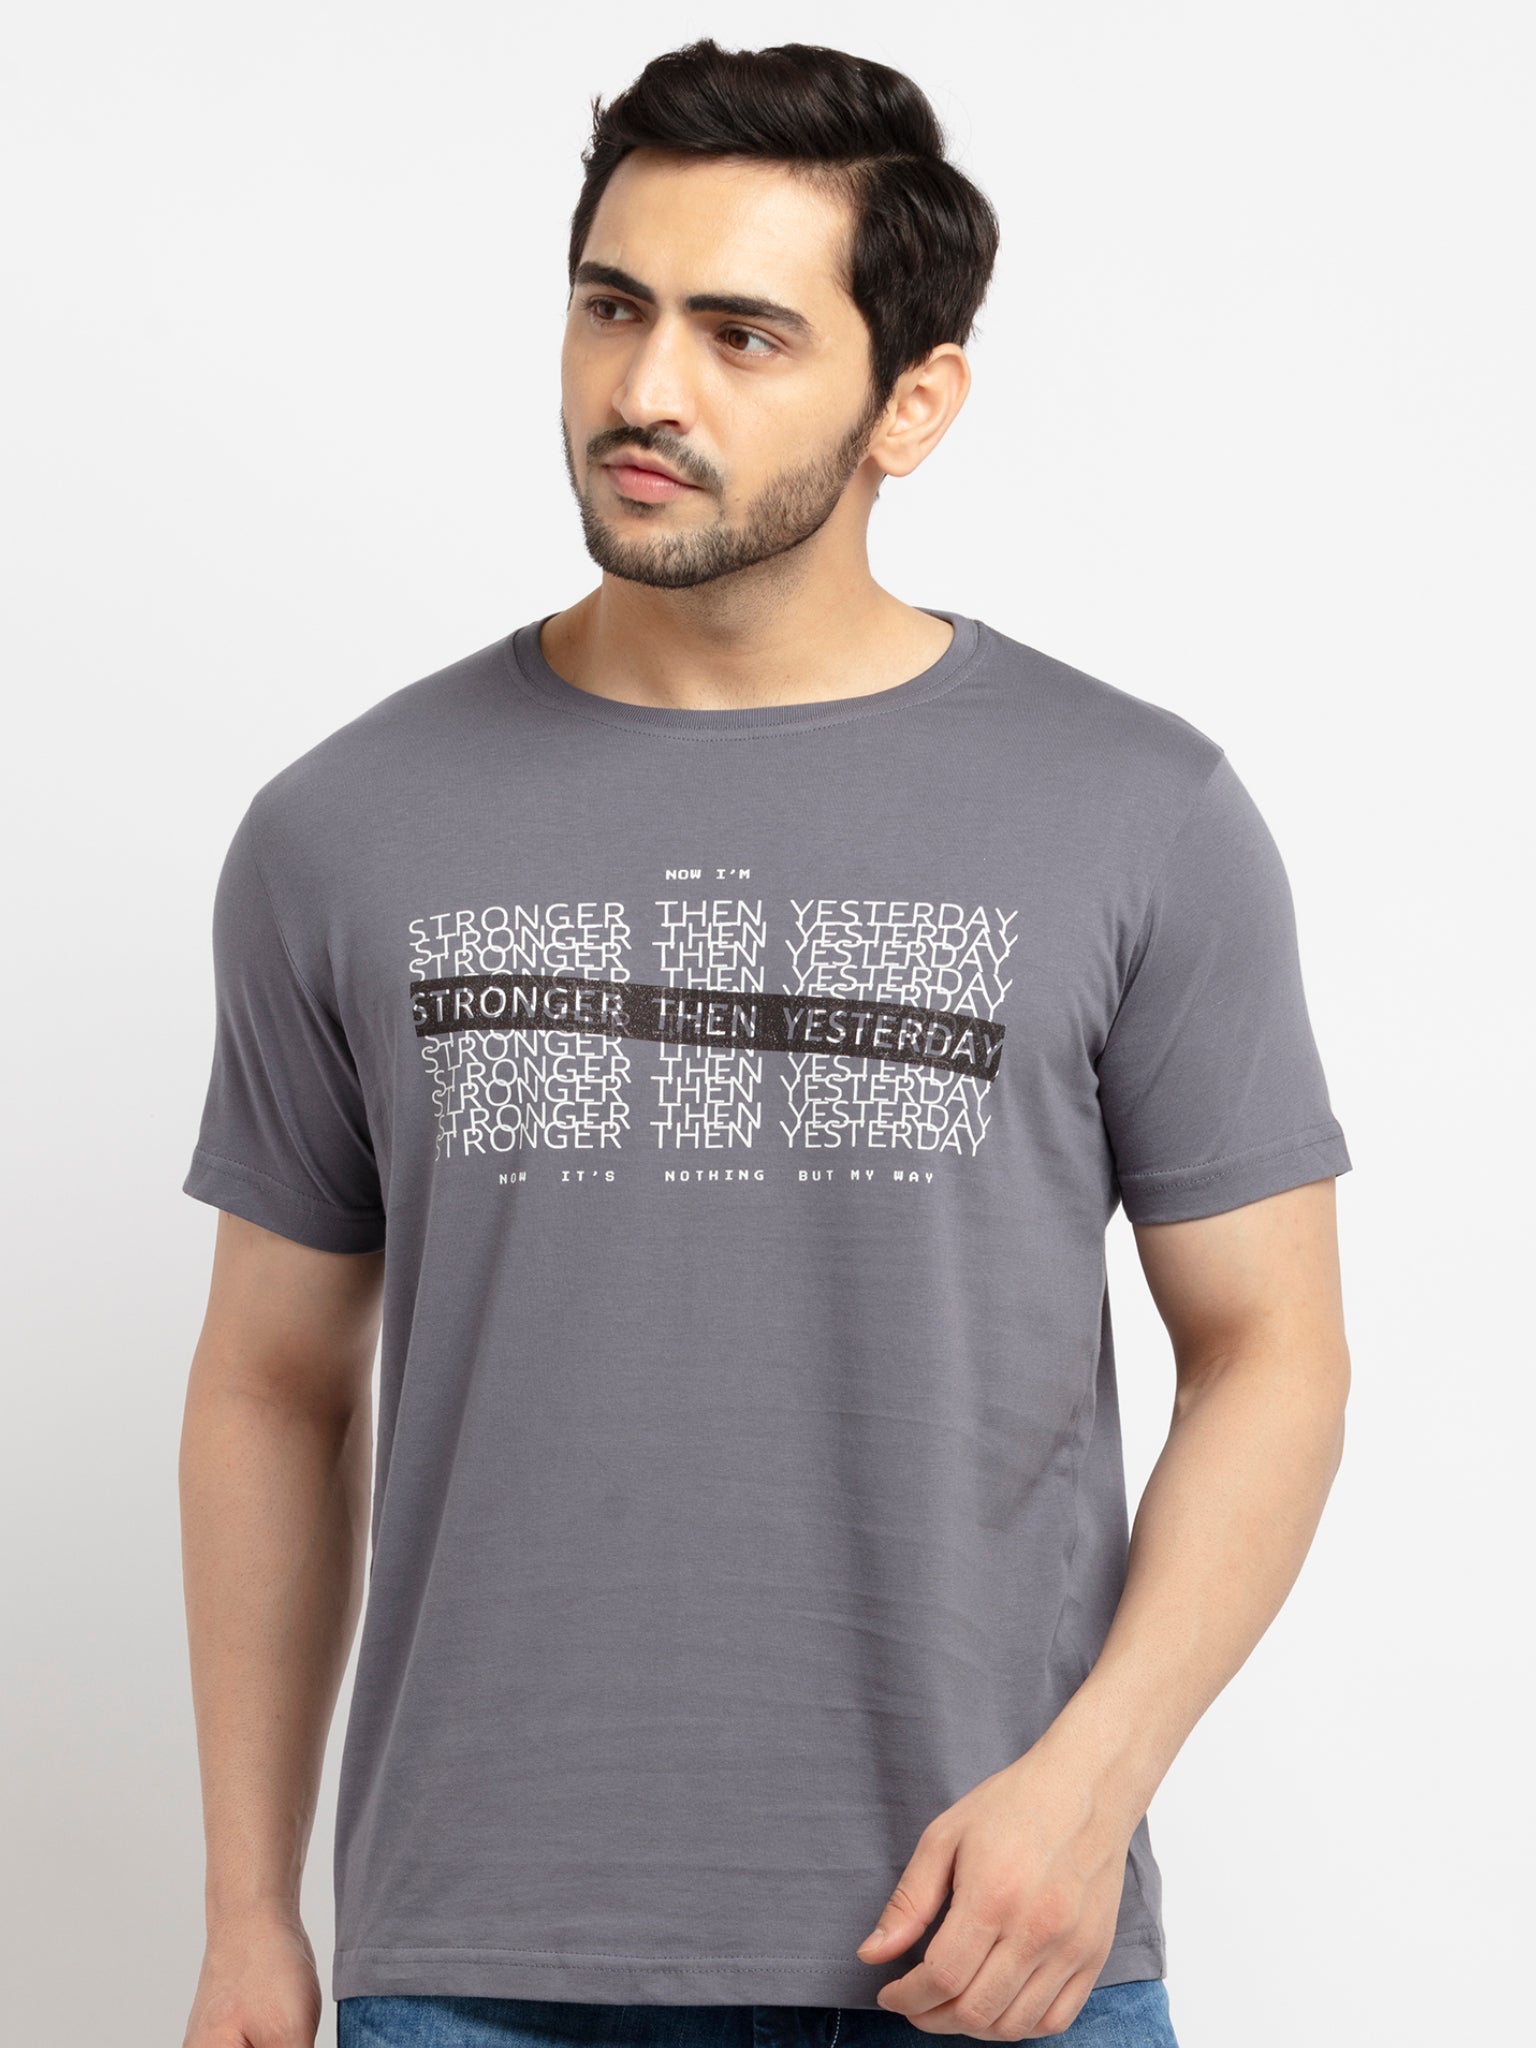 Status Quo |Printed Round Neck T-shirt - S, M, L, XL, XXL